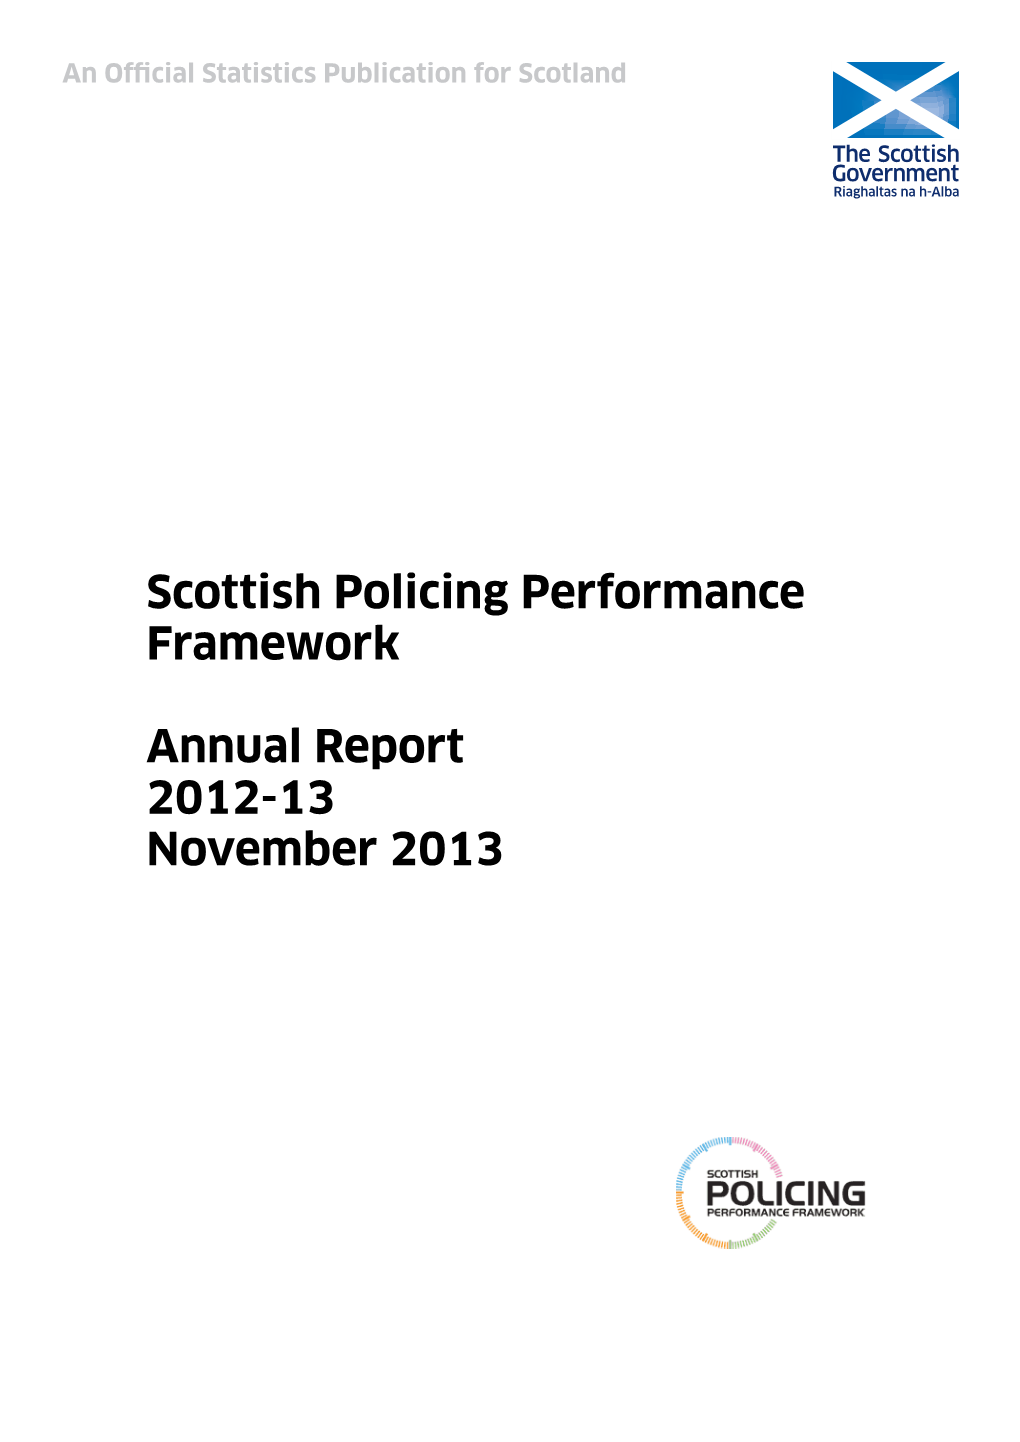 Scottish Policing Performance Framework Annual Report 2012-13